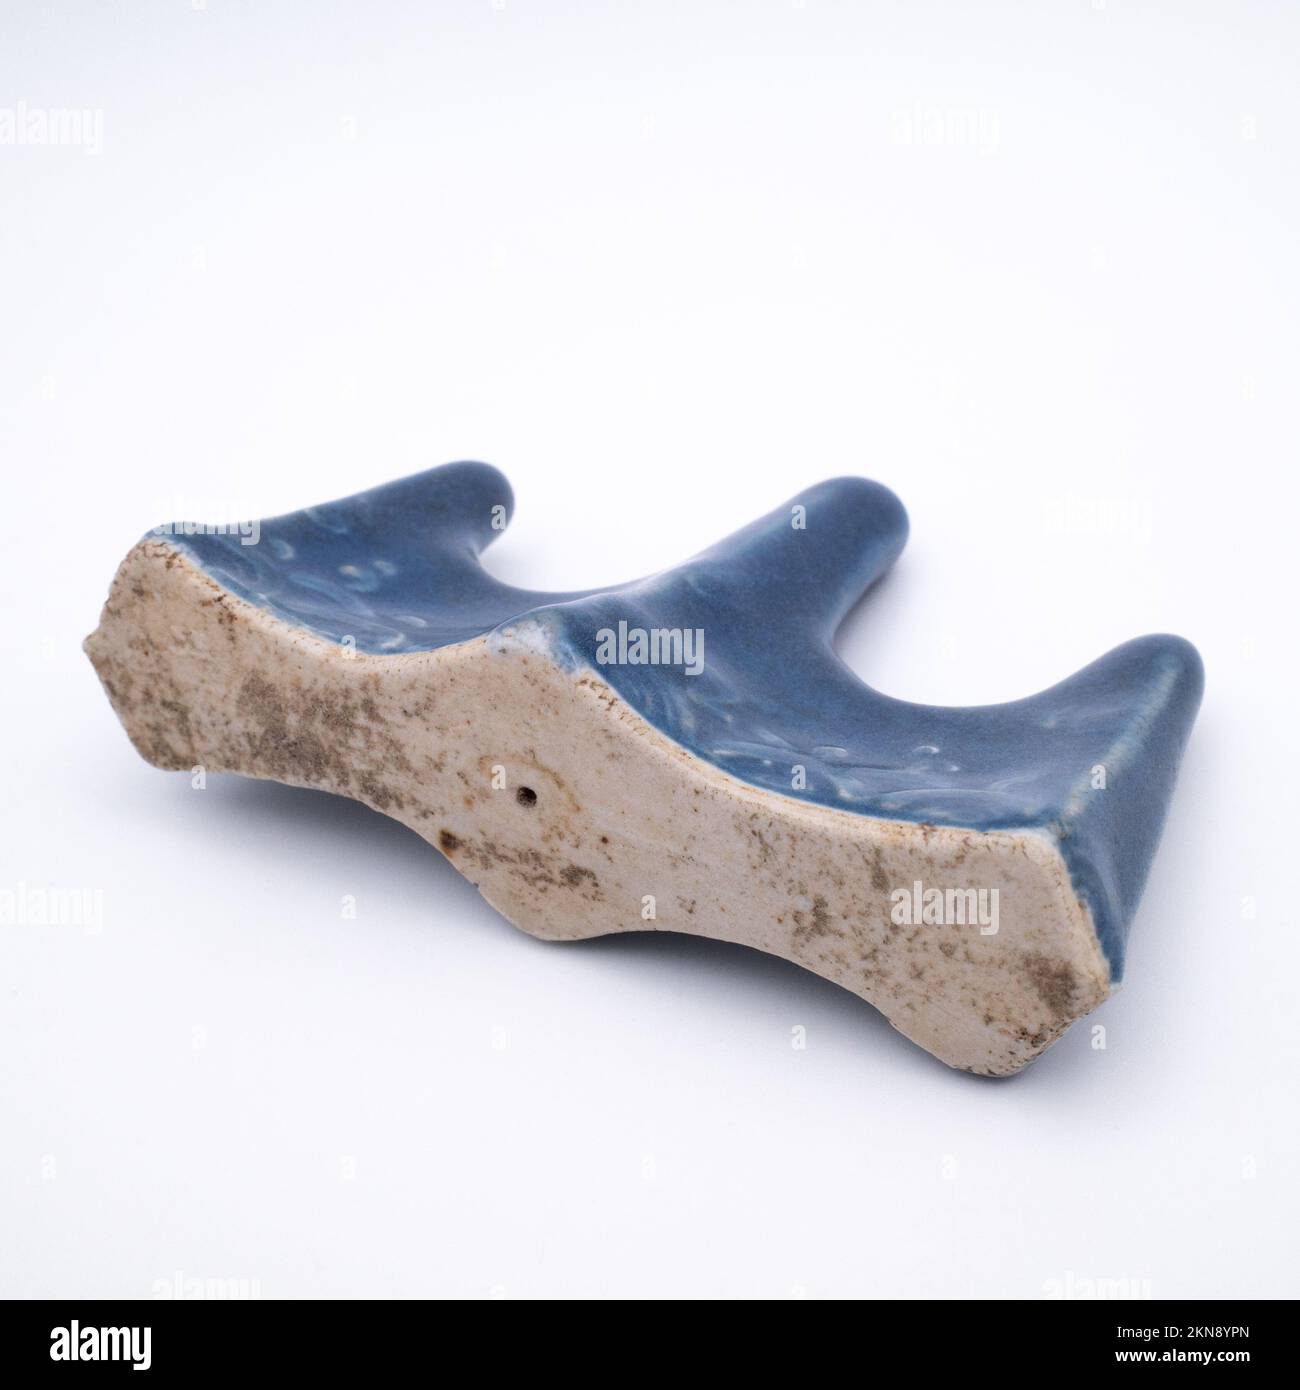 Elegante spazzola in porcellana a forma di montagna smaltata blu cinese. Dinastia Qing Foto Stock